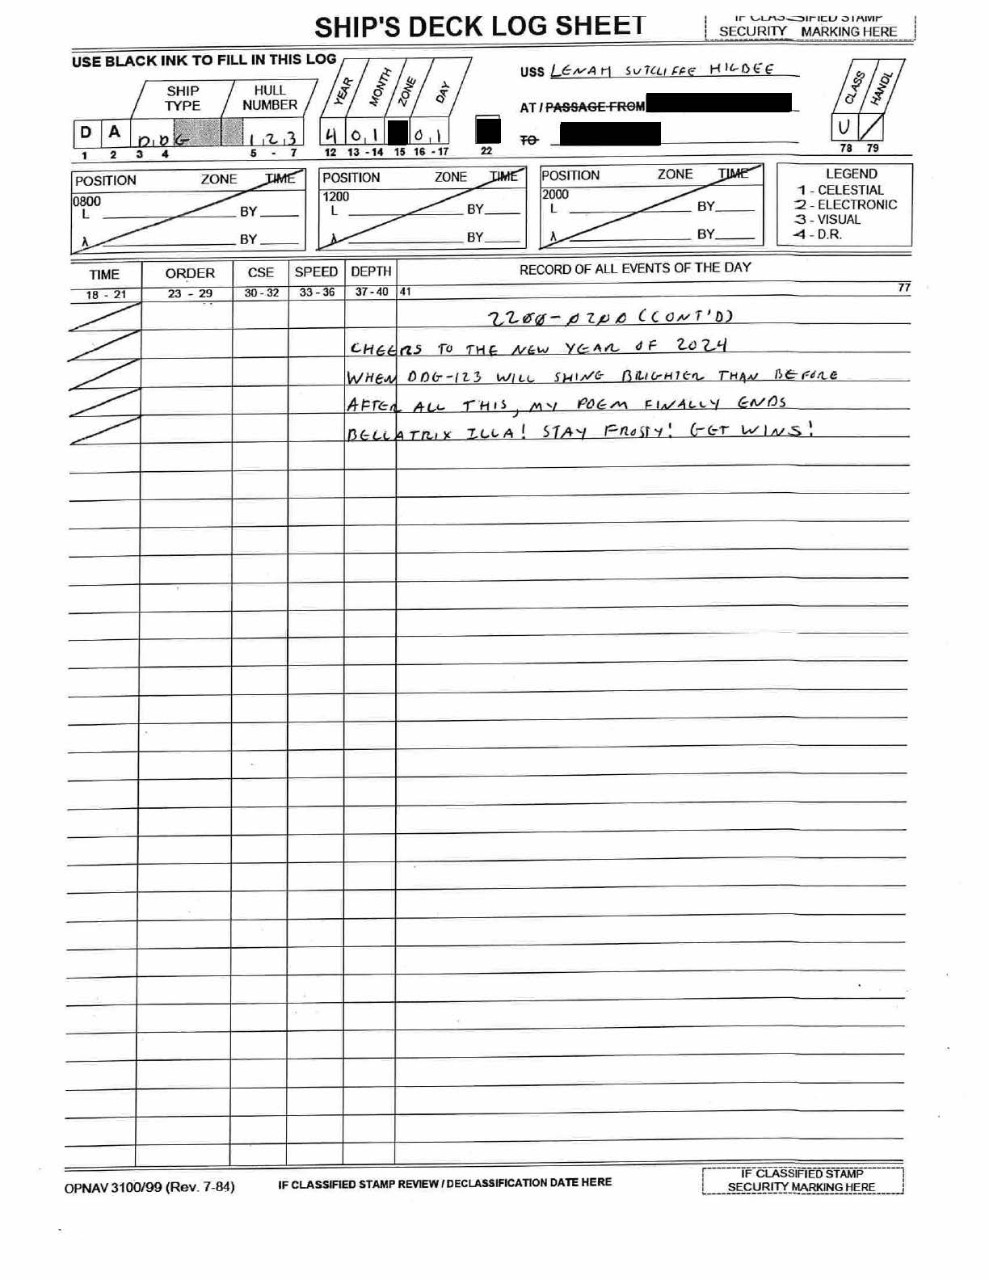 USS Lenah Sutcliffe Higbee (DDG-123) 2024 New Year's Deck Log Entry Page 2